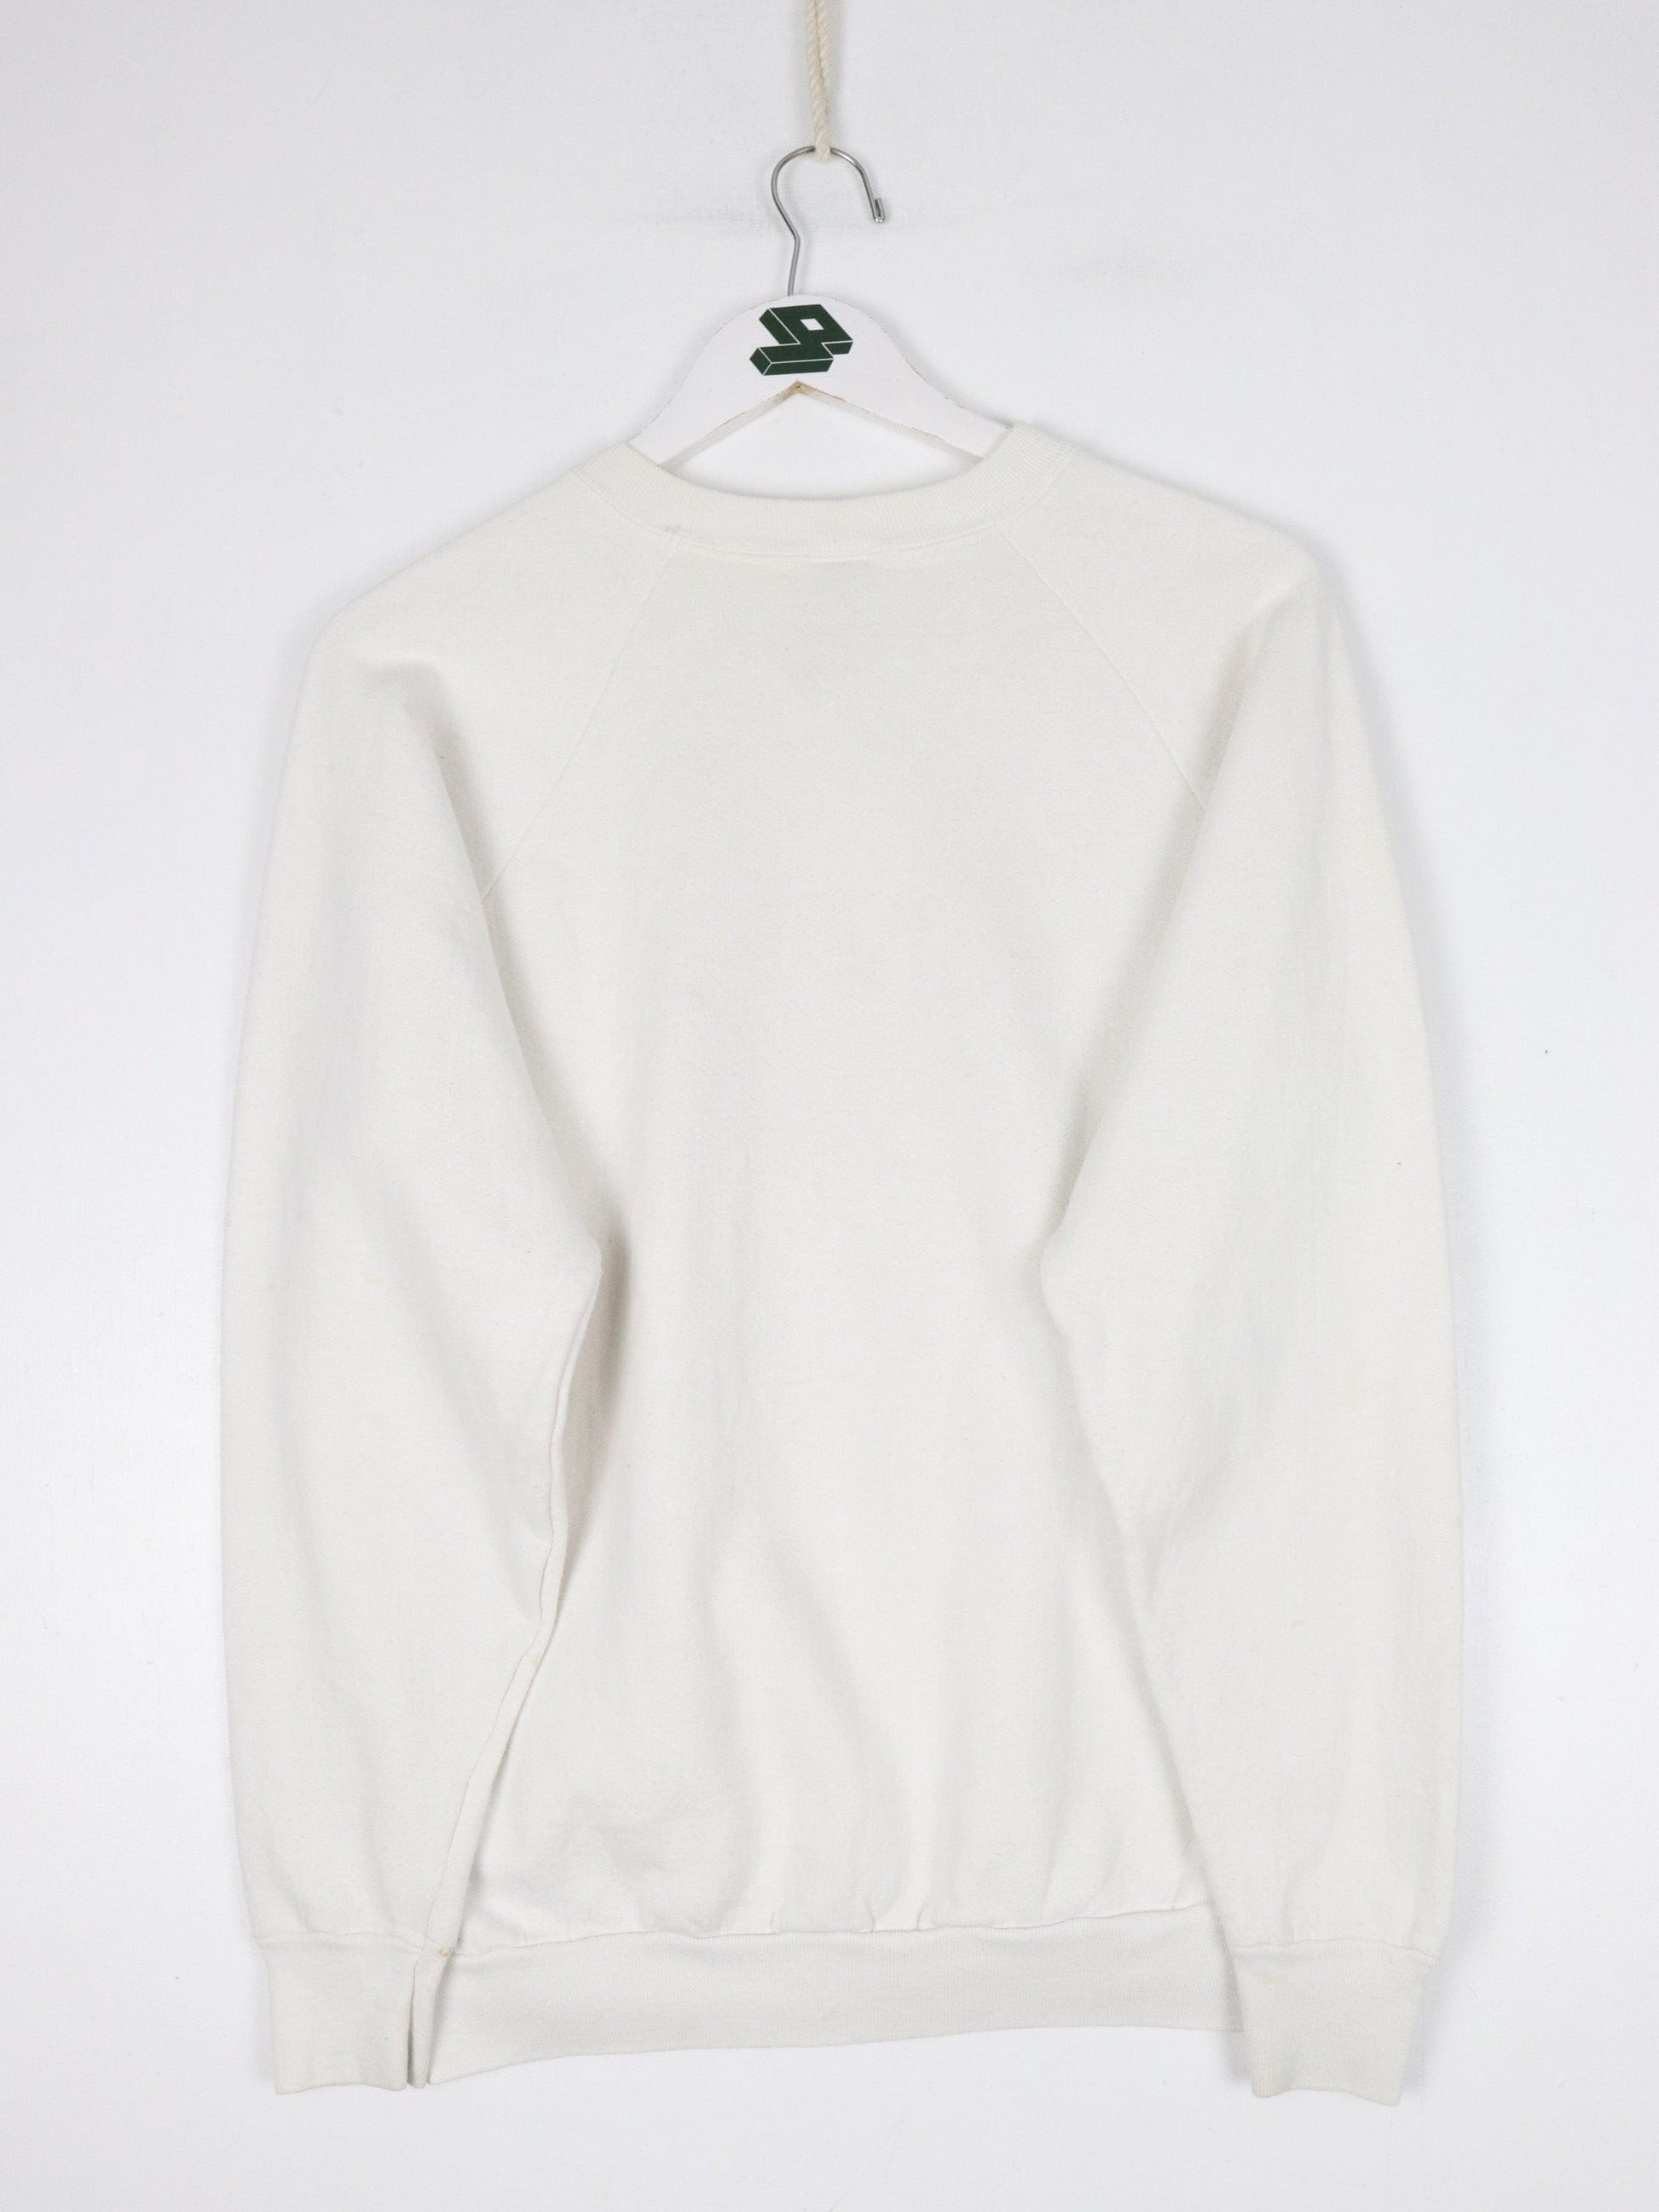 Other Sweatshirts & Hoodies Vintage Aspen Sweatshirt Fits Medium White 90s